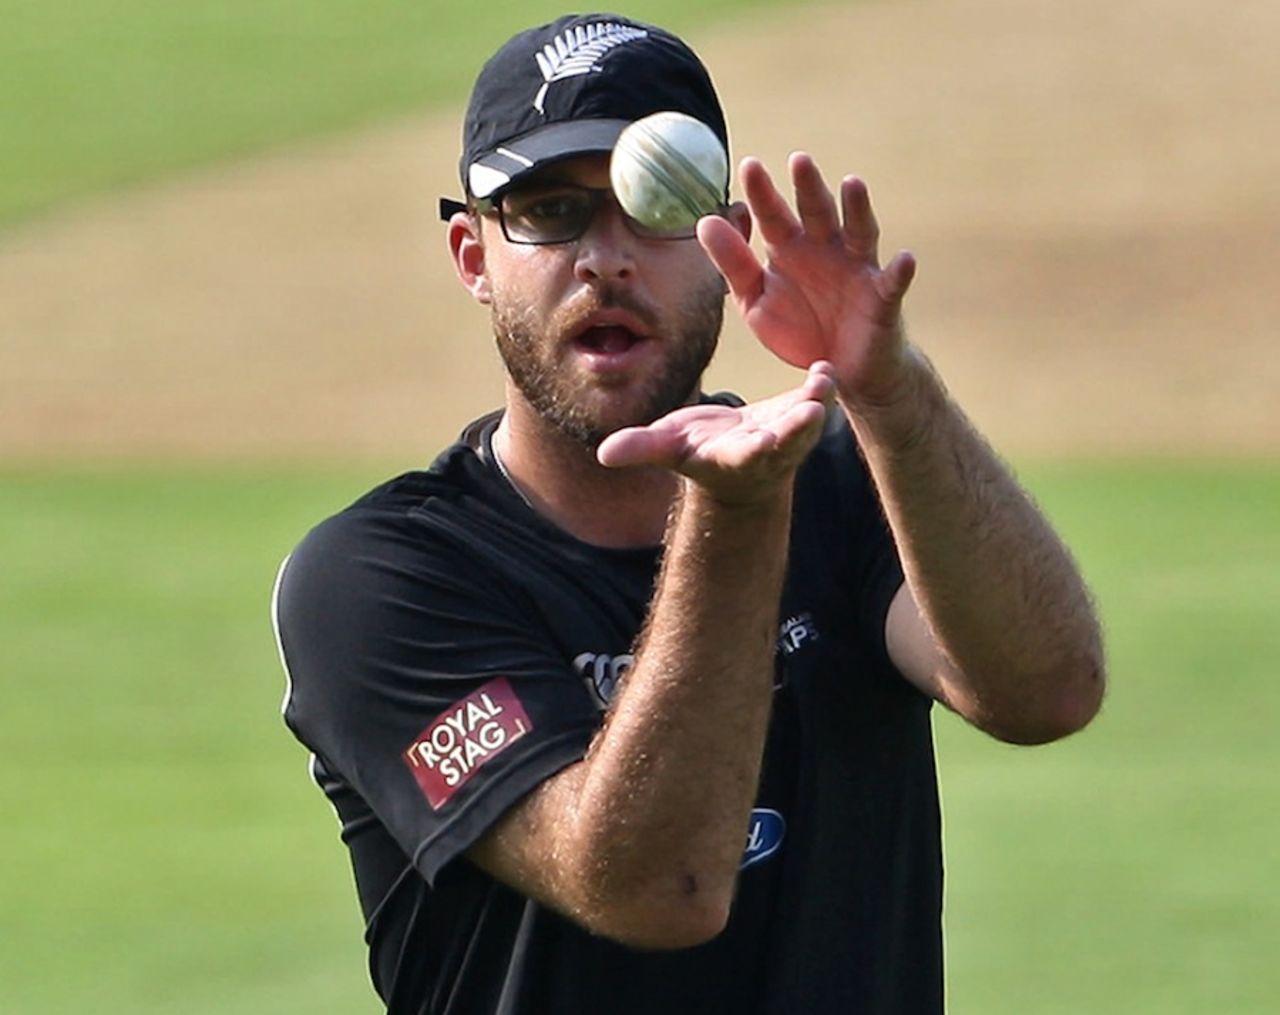 Daniel Vettori catches a ball during practice, Visakhapatnam, September 7, 2012